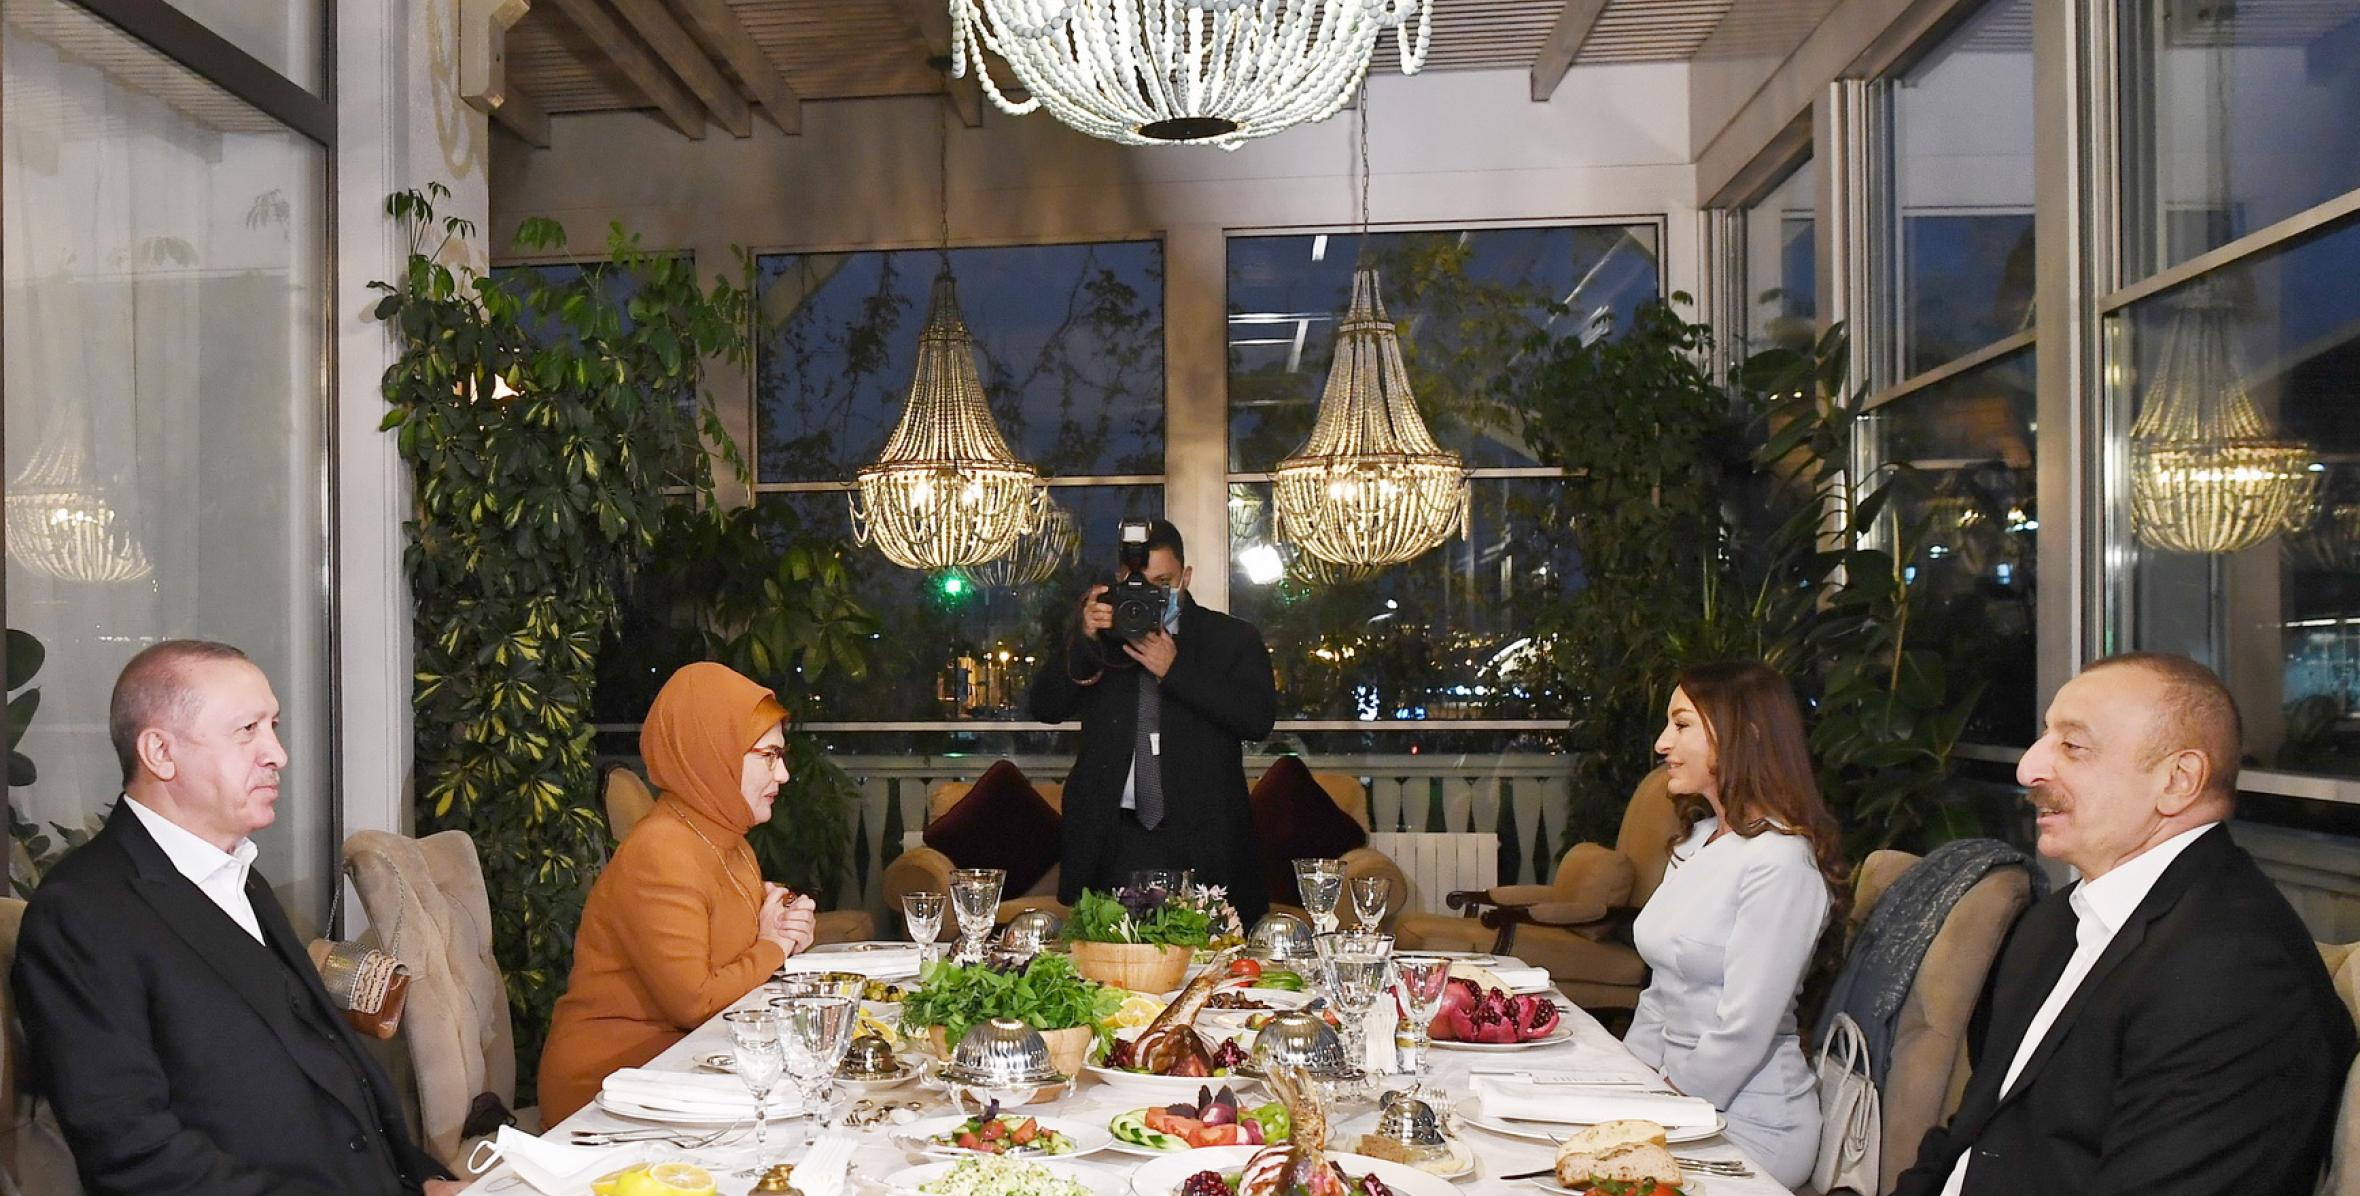 Ilham Aliyev and Turkish President Recep Tayyip Erdogan dined together